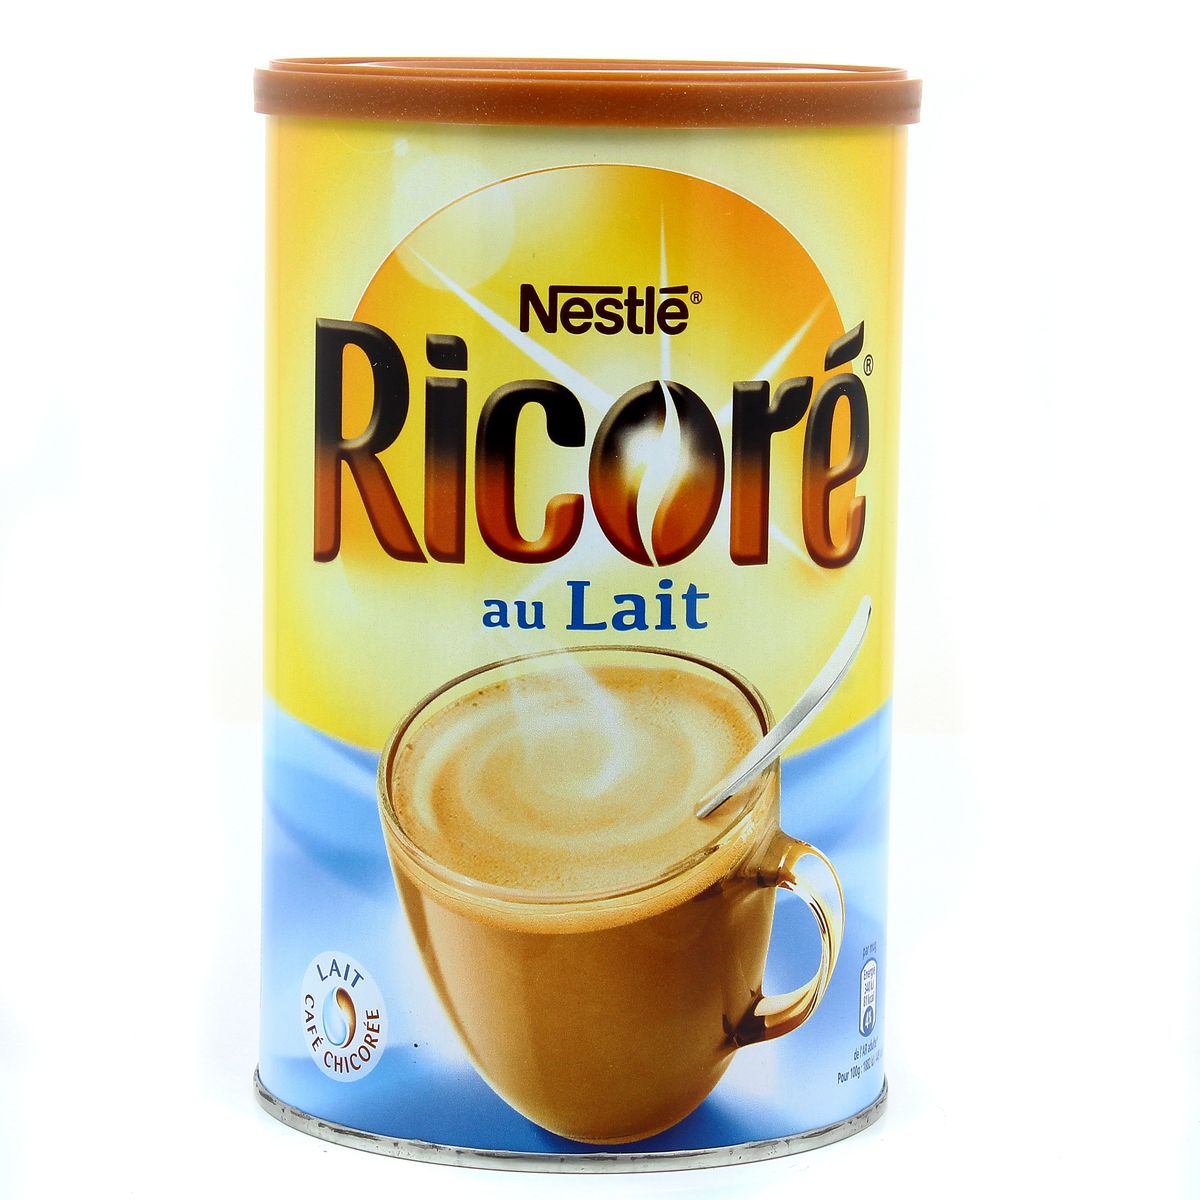 Ricoré with milk